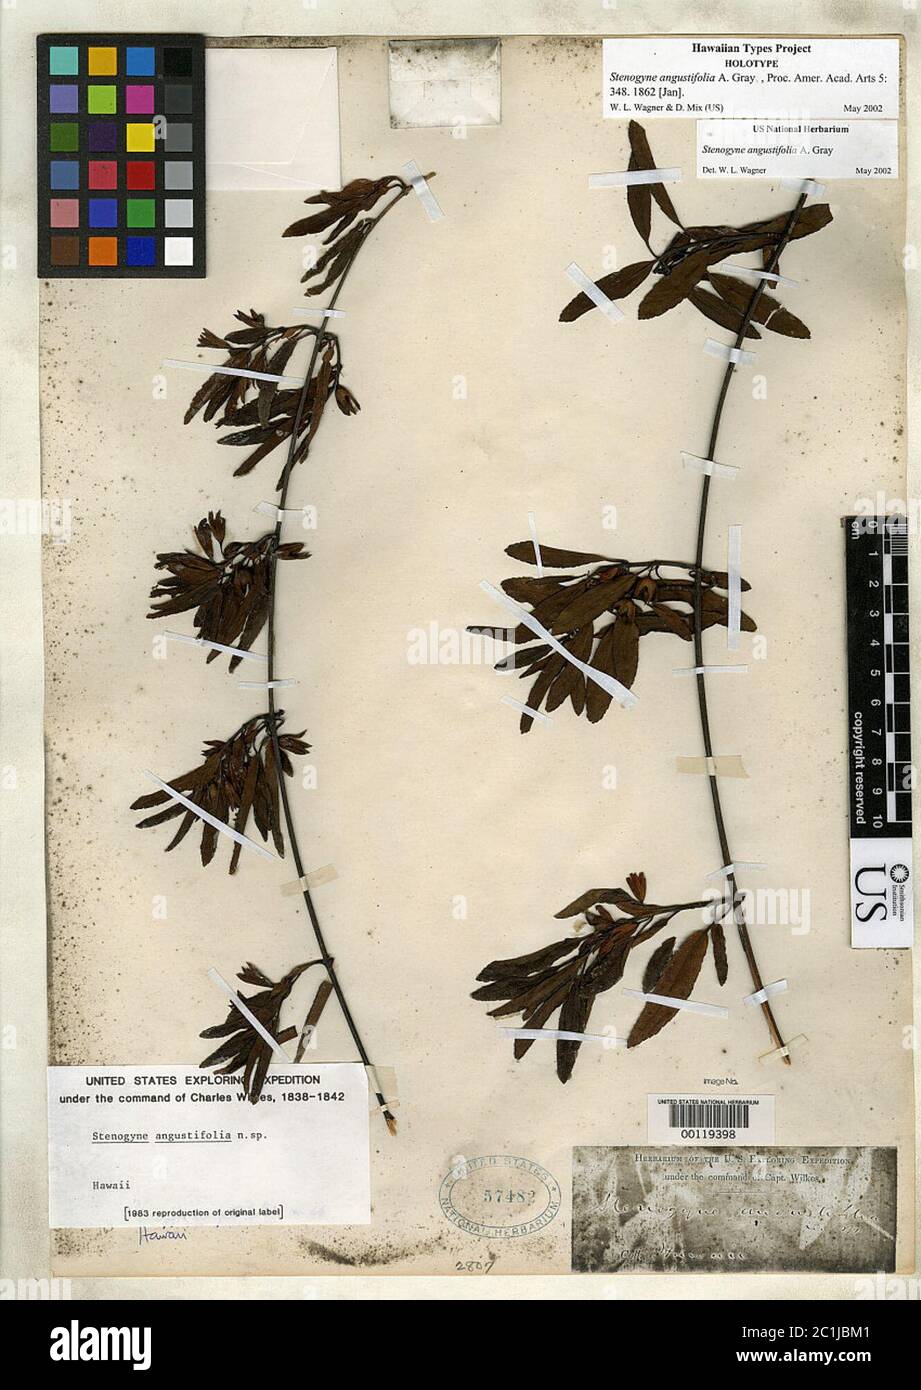 Stenogyne angustifolia A Gray Stenogyne angustifolia A Gray. Stock Photo